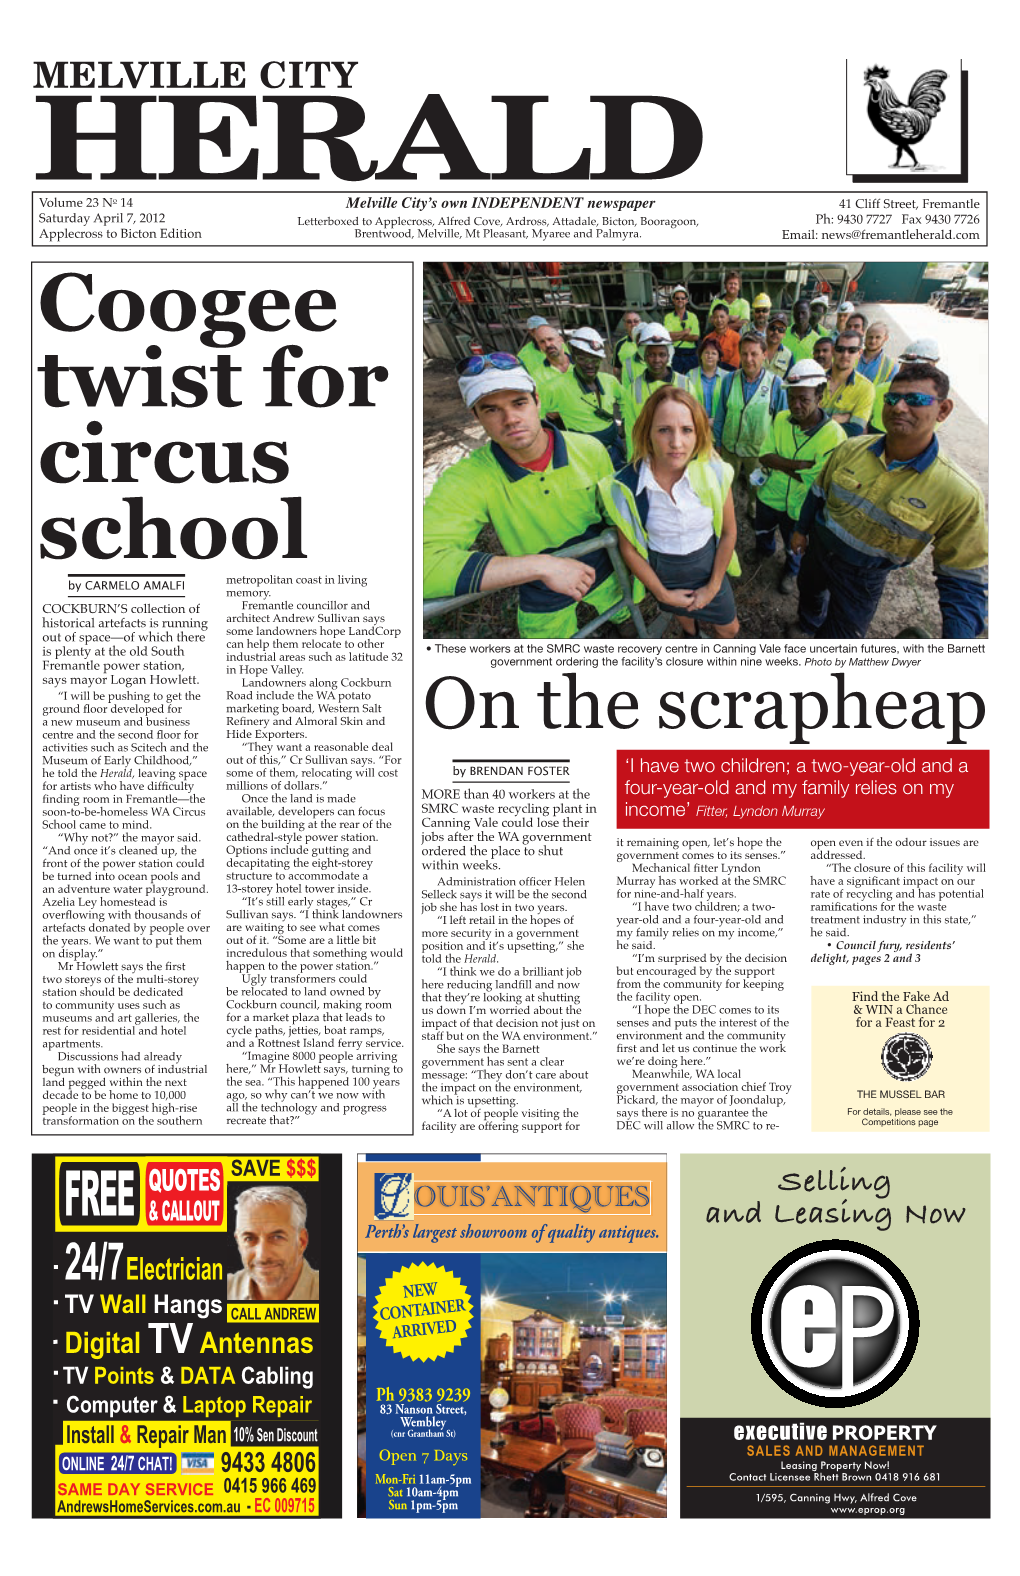 Coogee Twist for Circus School Metropolitan Coast in Living by CARMELO AMALFI Memory